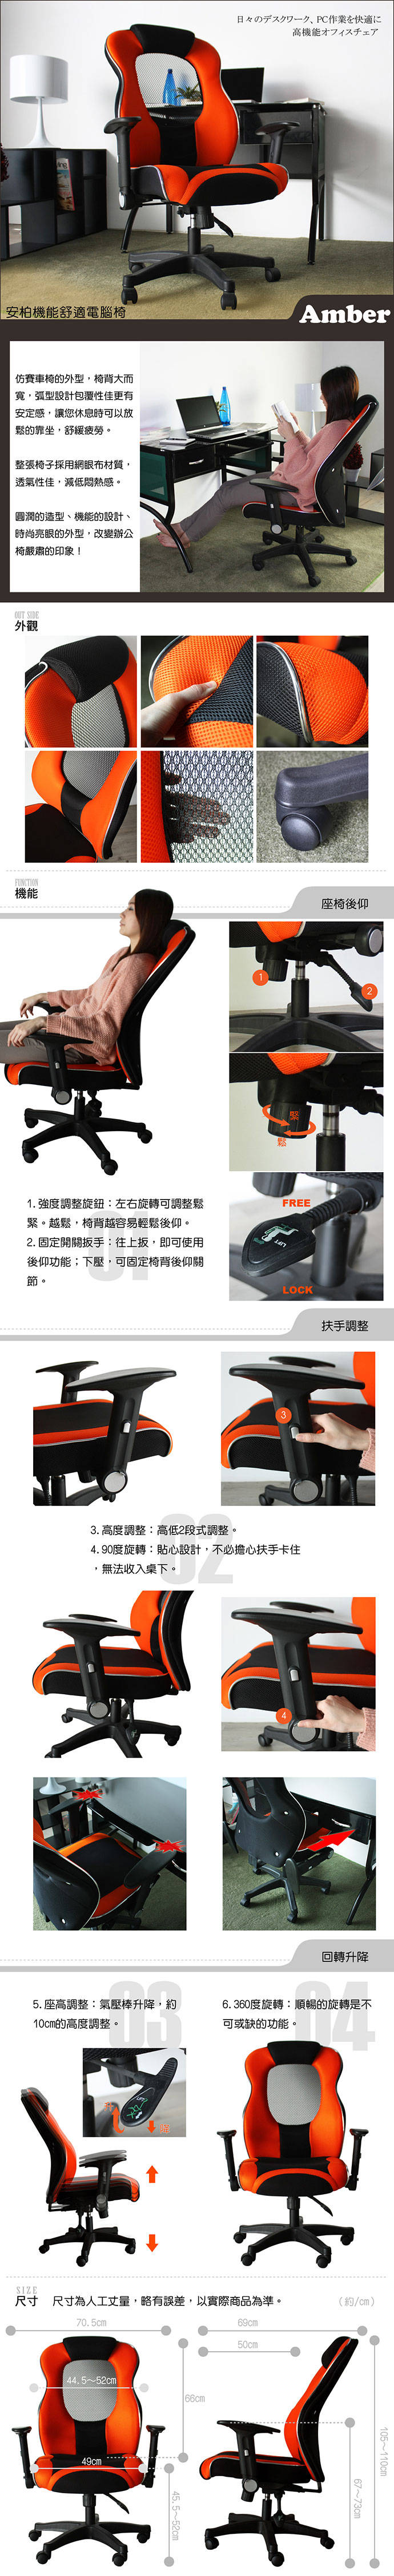 Amber安柏機能舒適電腦椅(KDY/SC-8813黑橘辦公椅)【obis】